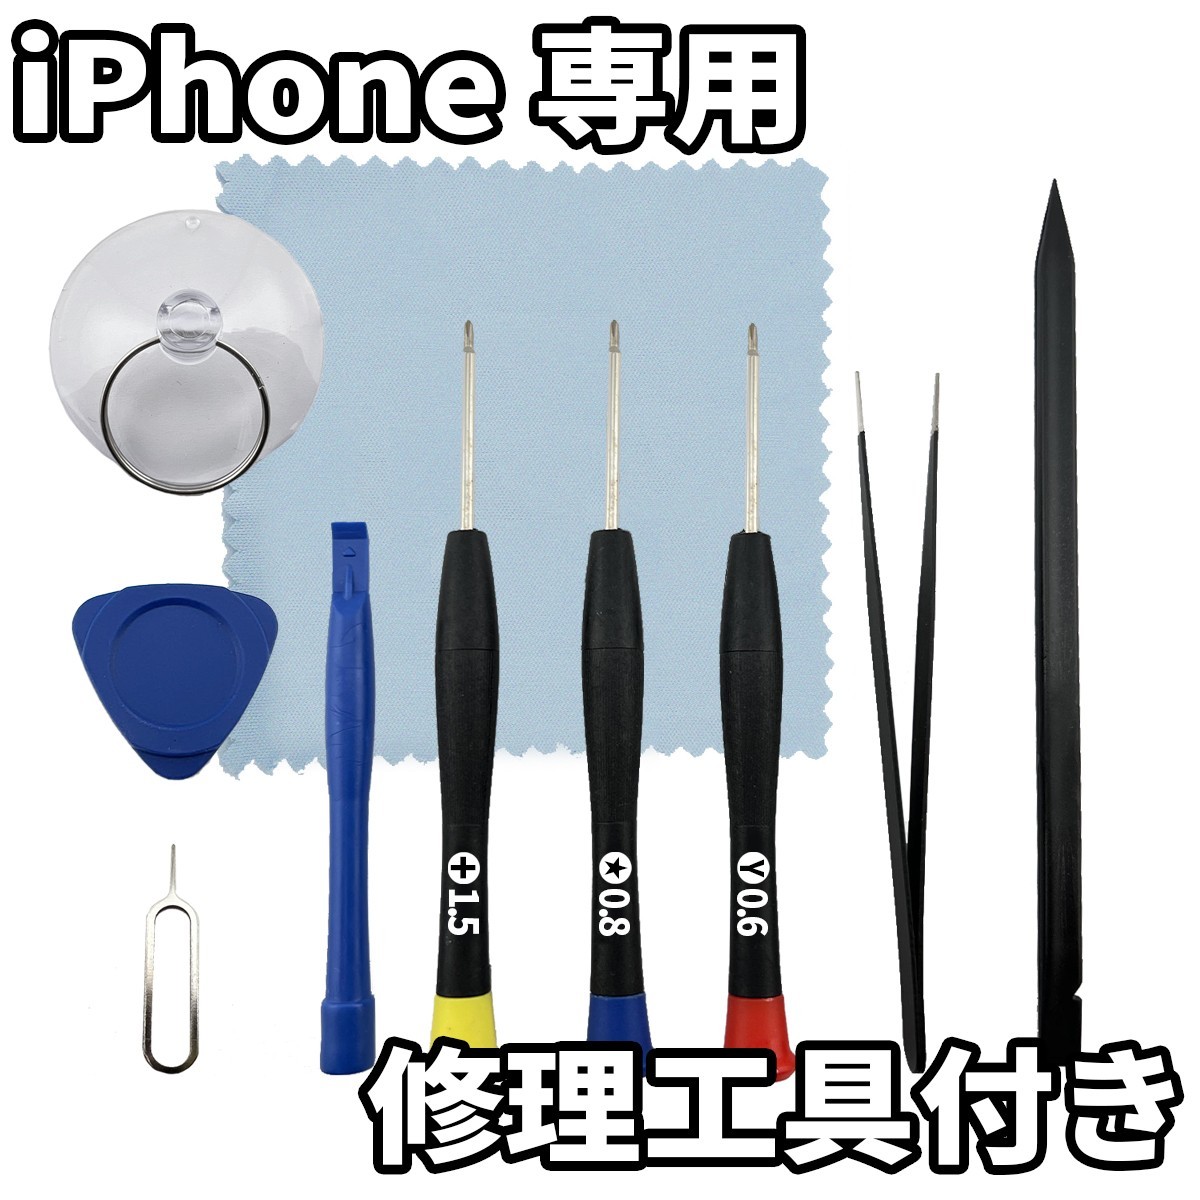 iPhone14 フロントパネル Incell コピーパネル 高品質 防水テープ 修理工具 互換 画面割れ 液晶 修理 iphone ガラス割れ ディスプレイ_画像4